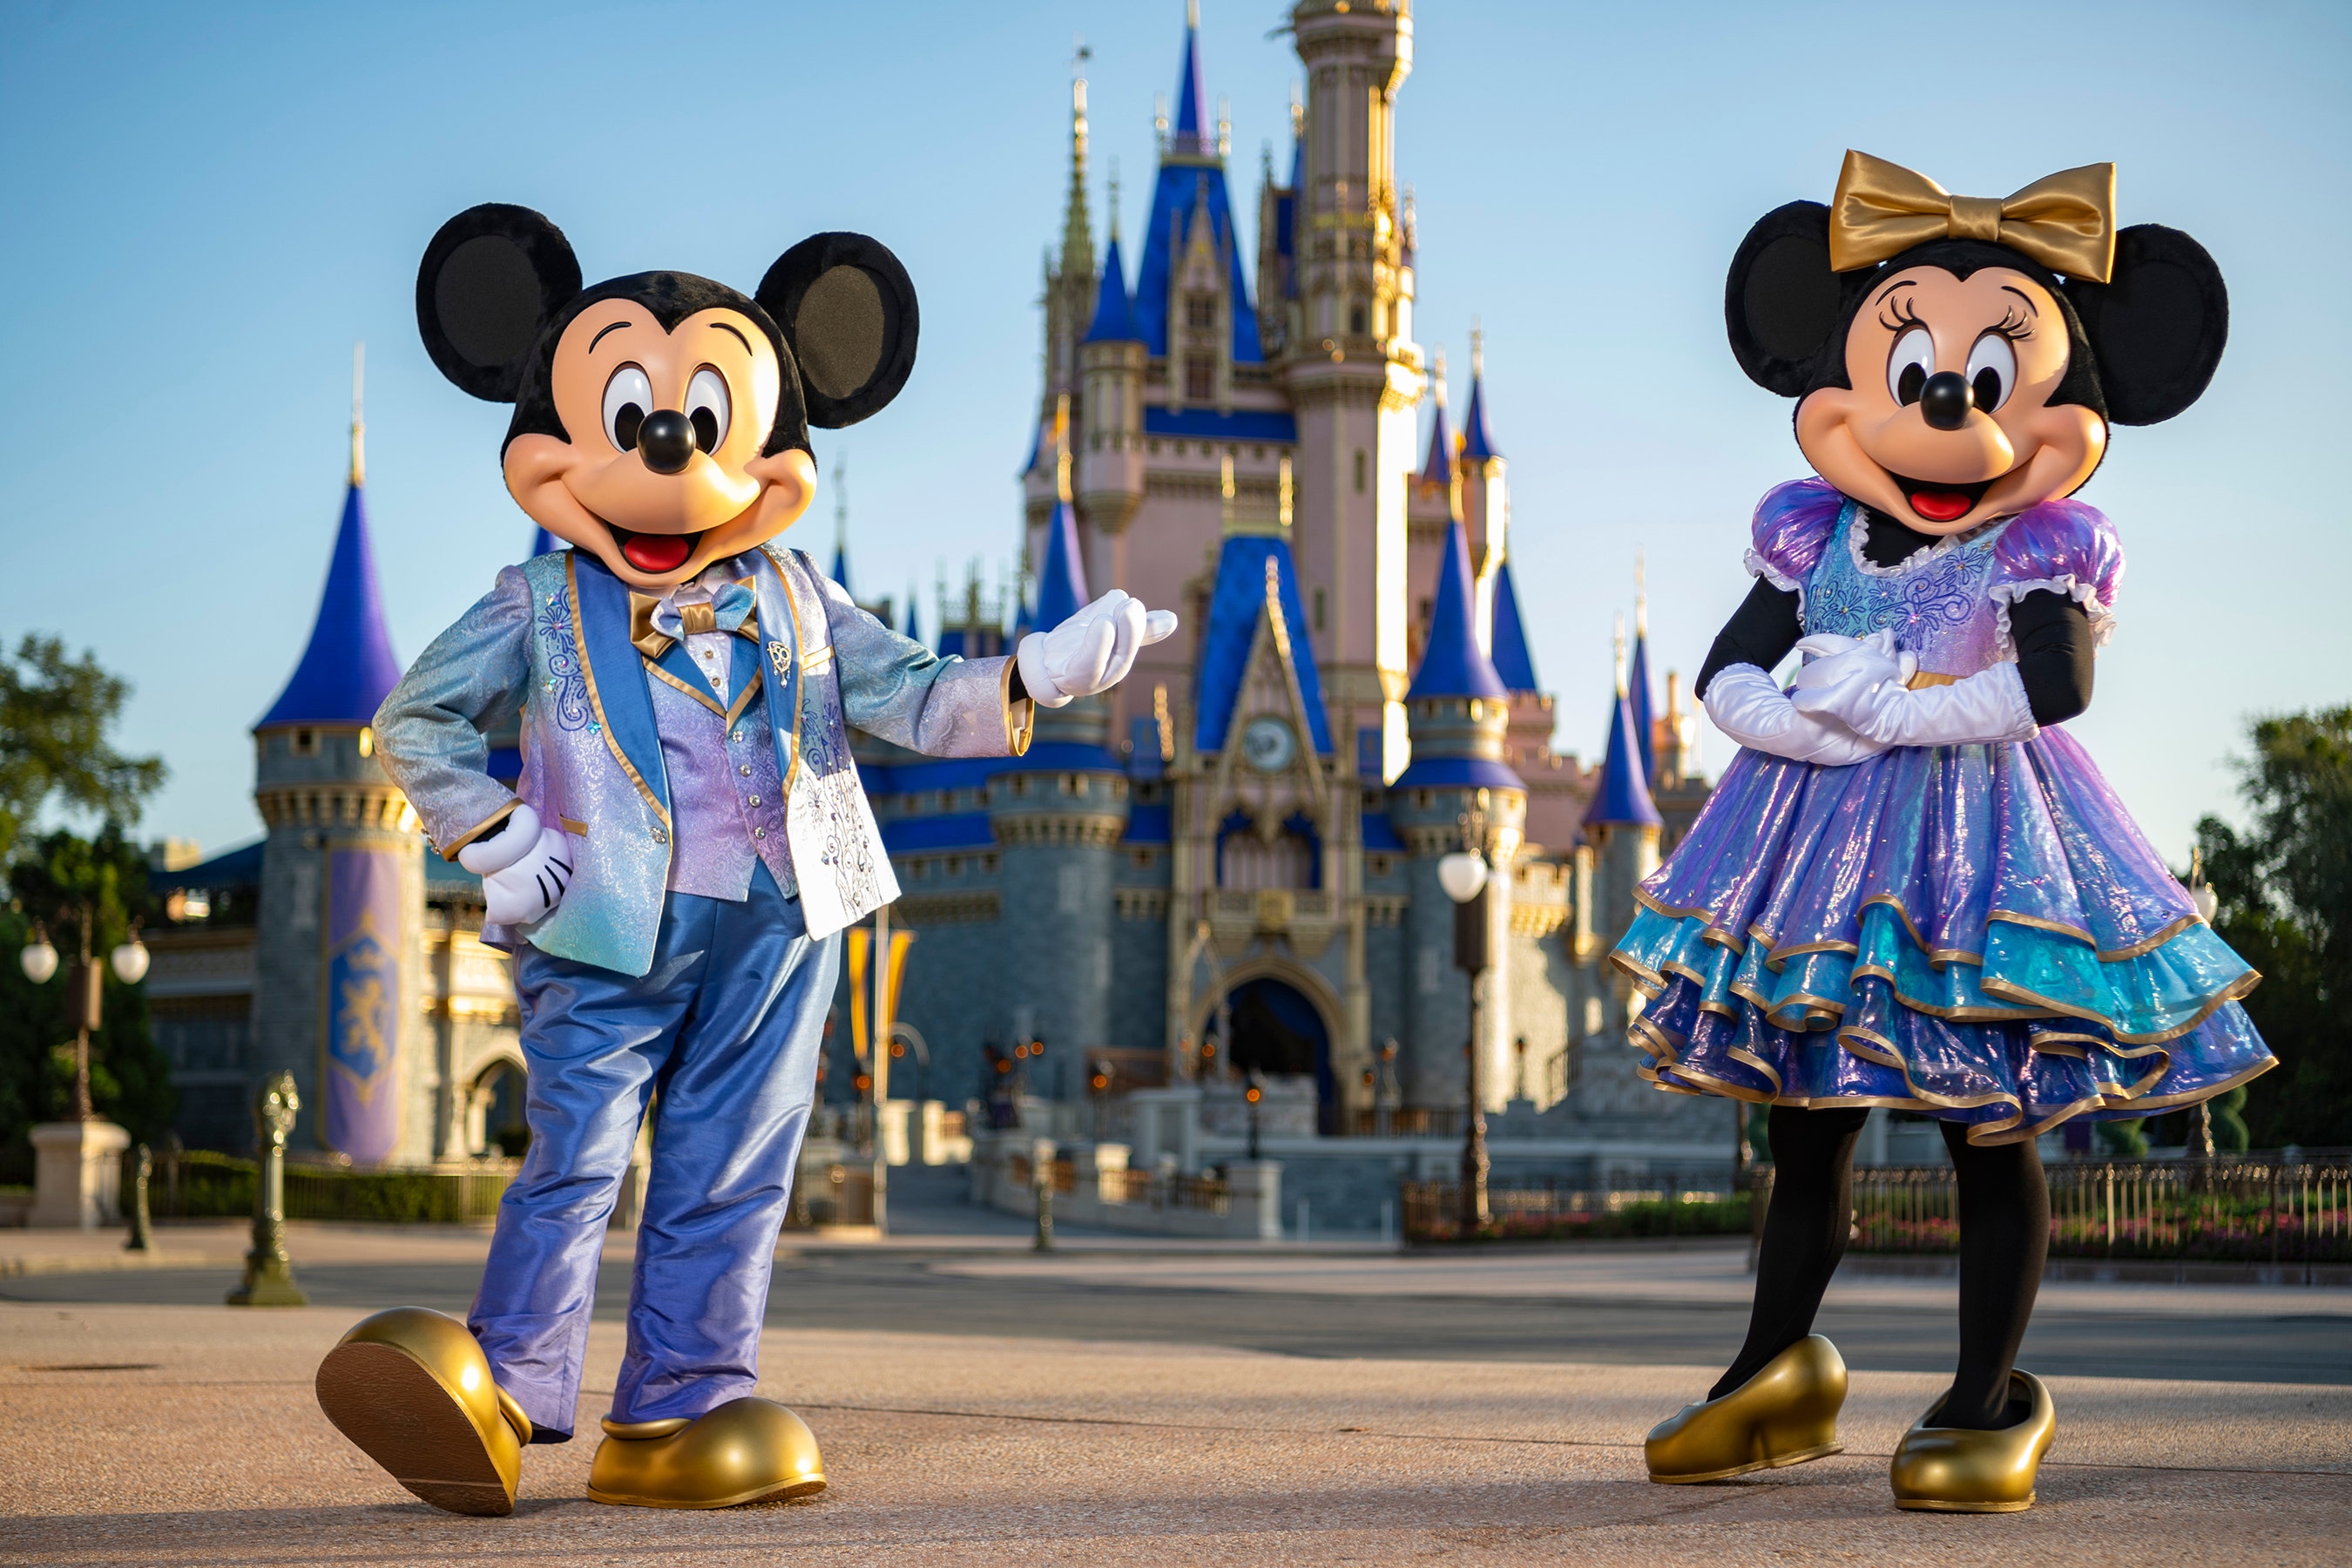 petition: Demand Disney Take Responsibility for Its Horrific